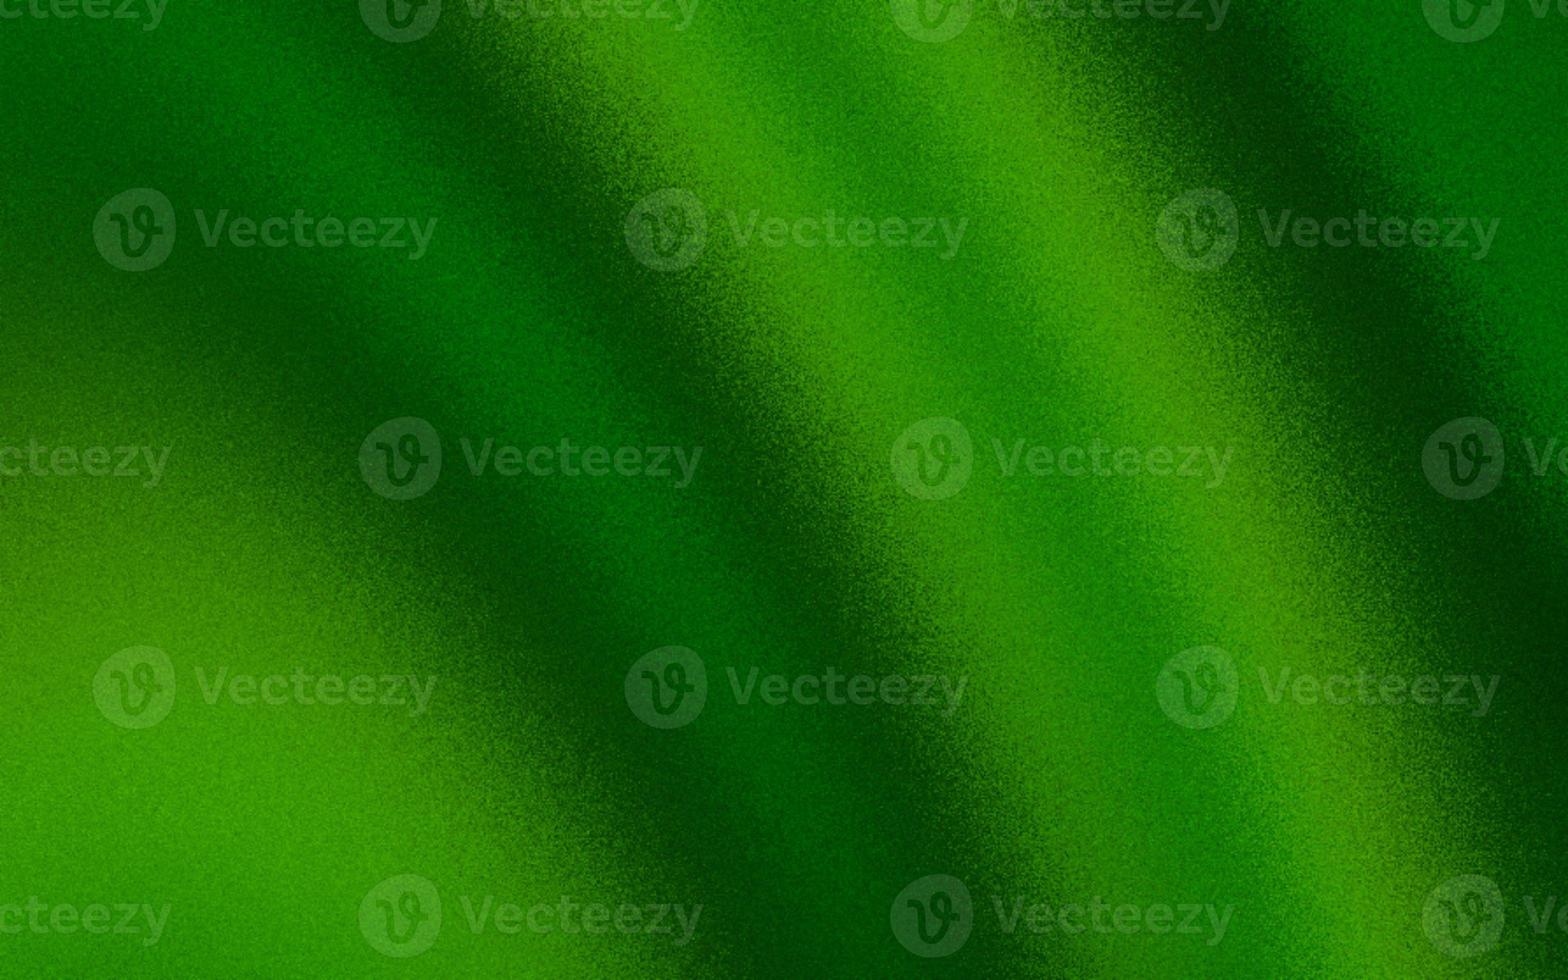 attraktiv grön lutning bakgrund med ljud eller spannmål texturer. grön grunge textur bakgrund. suddig lutning bakgrund. sprutas lutning med de spannmål eller ljud effekter. foto